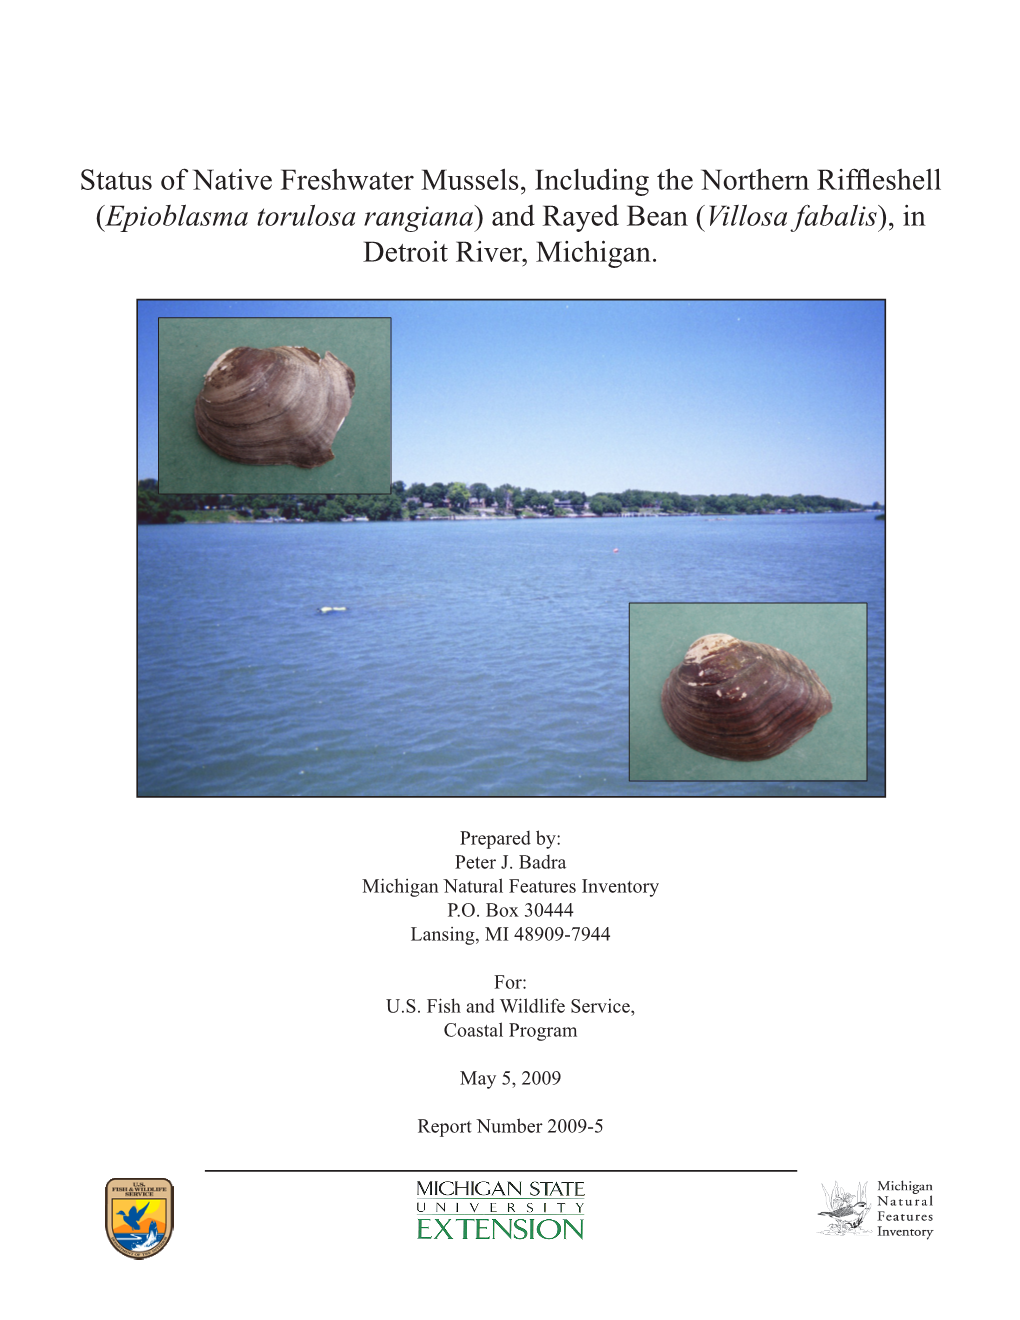 Status of Native Freshwater Mussels, Including the Northern Riffleshell (Epioblasma Torulosa Rangiana) and Rayed Bean (Villosa Fabalis), in Detroit River, Michigan